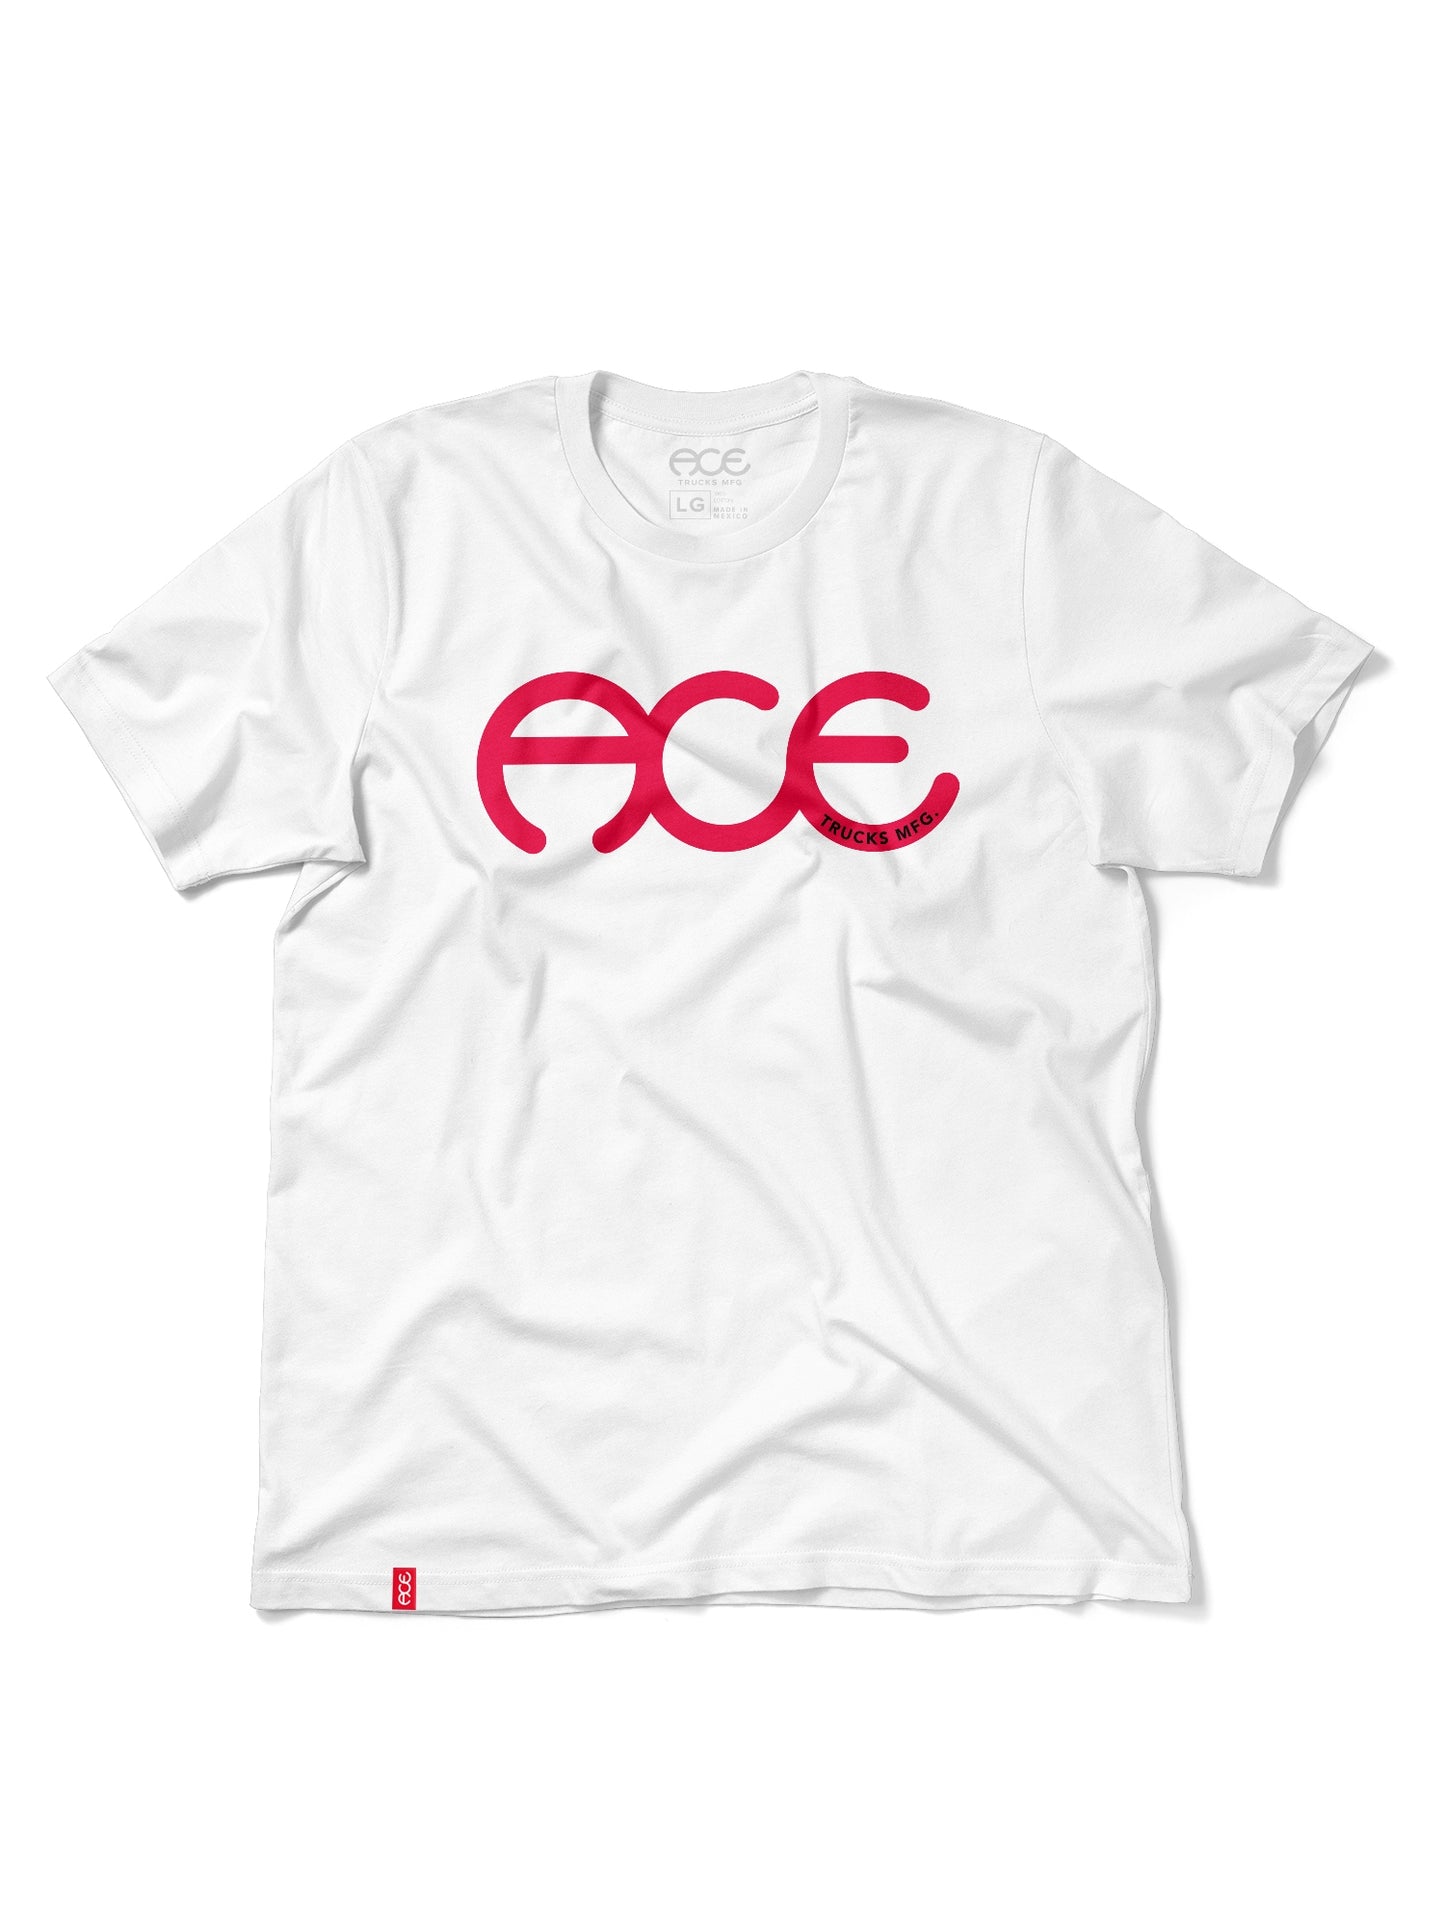 ACE Rings Logo Tee - White